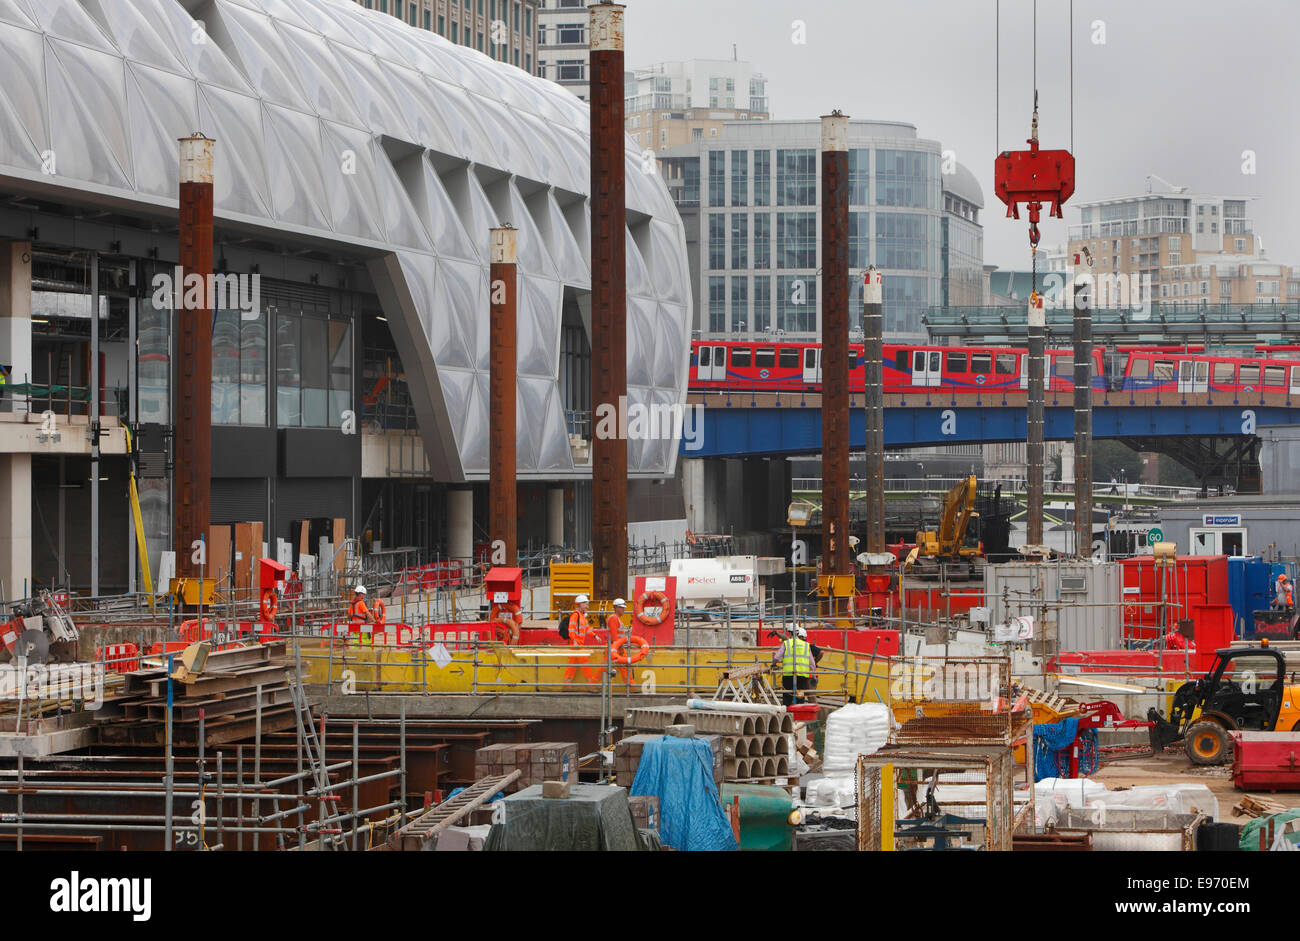 Großbritannien, London, Canary Wharf, Crossrail station Baustelle im Dock auf dem Canary Wharf Anwesen gebaut. Stockfoto